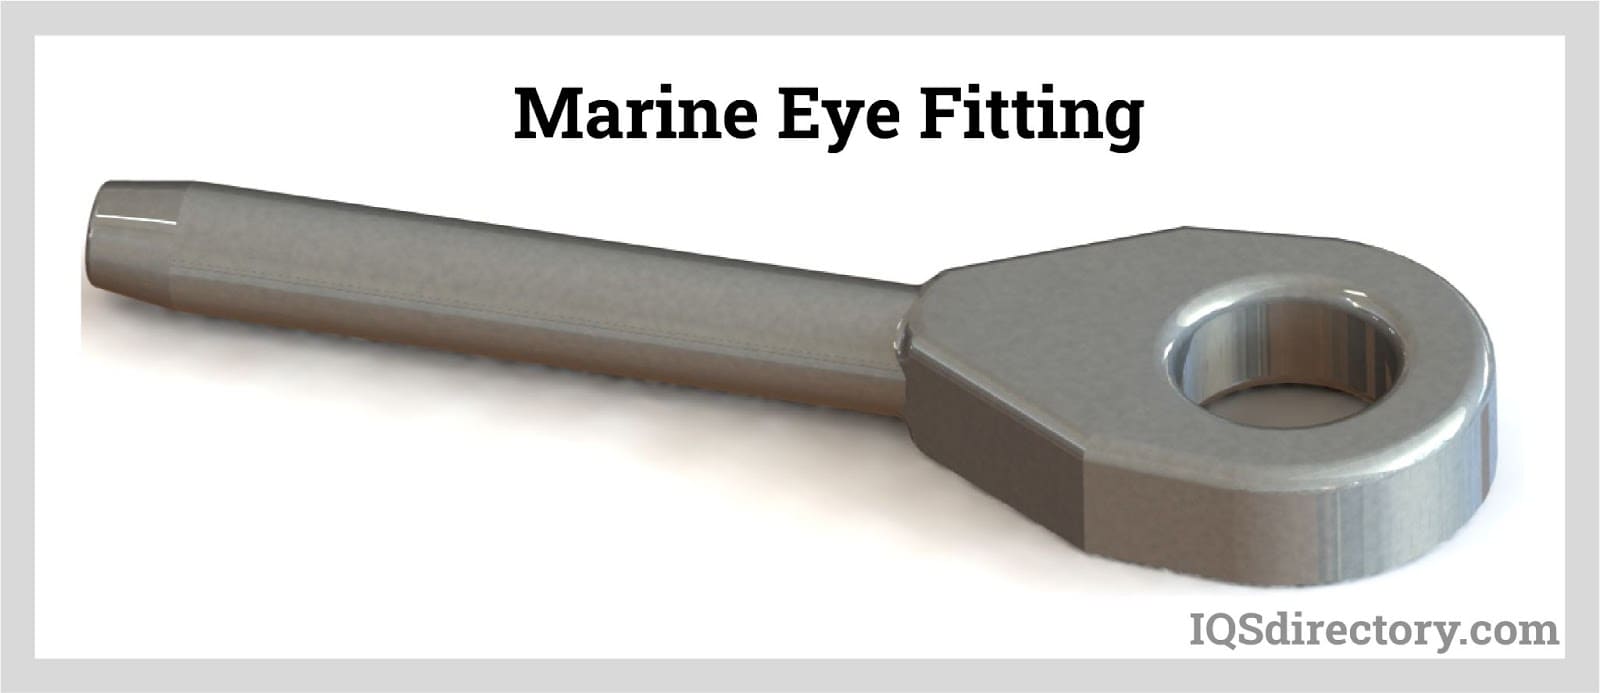 Marine Eye Fitting